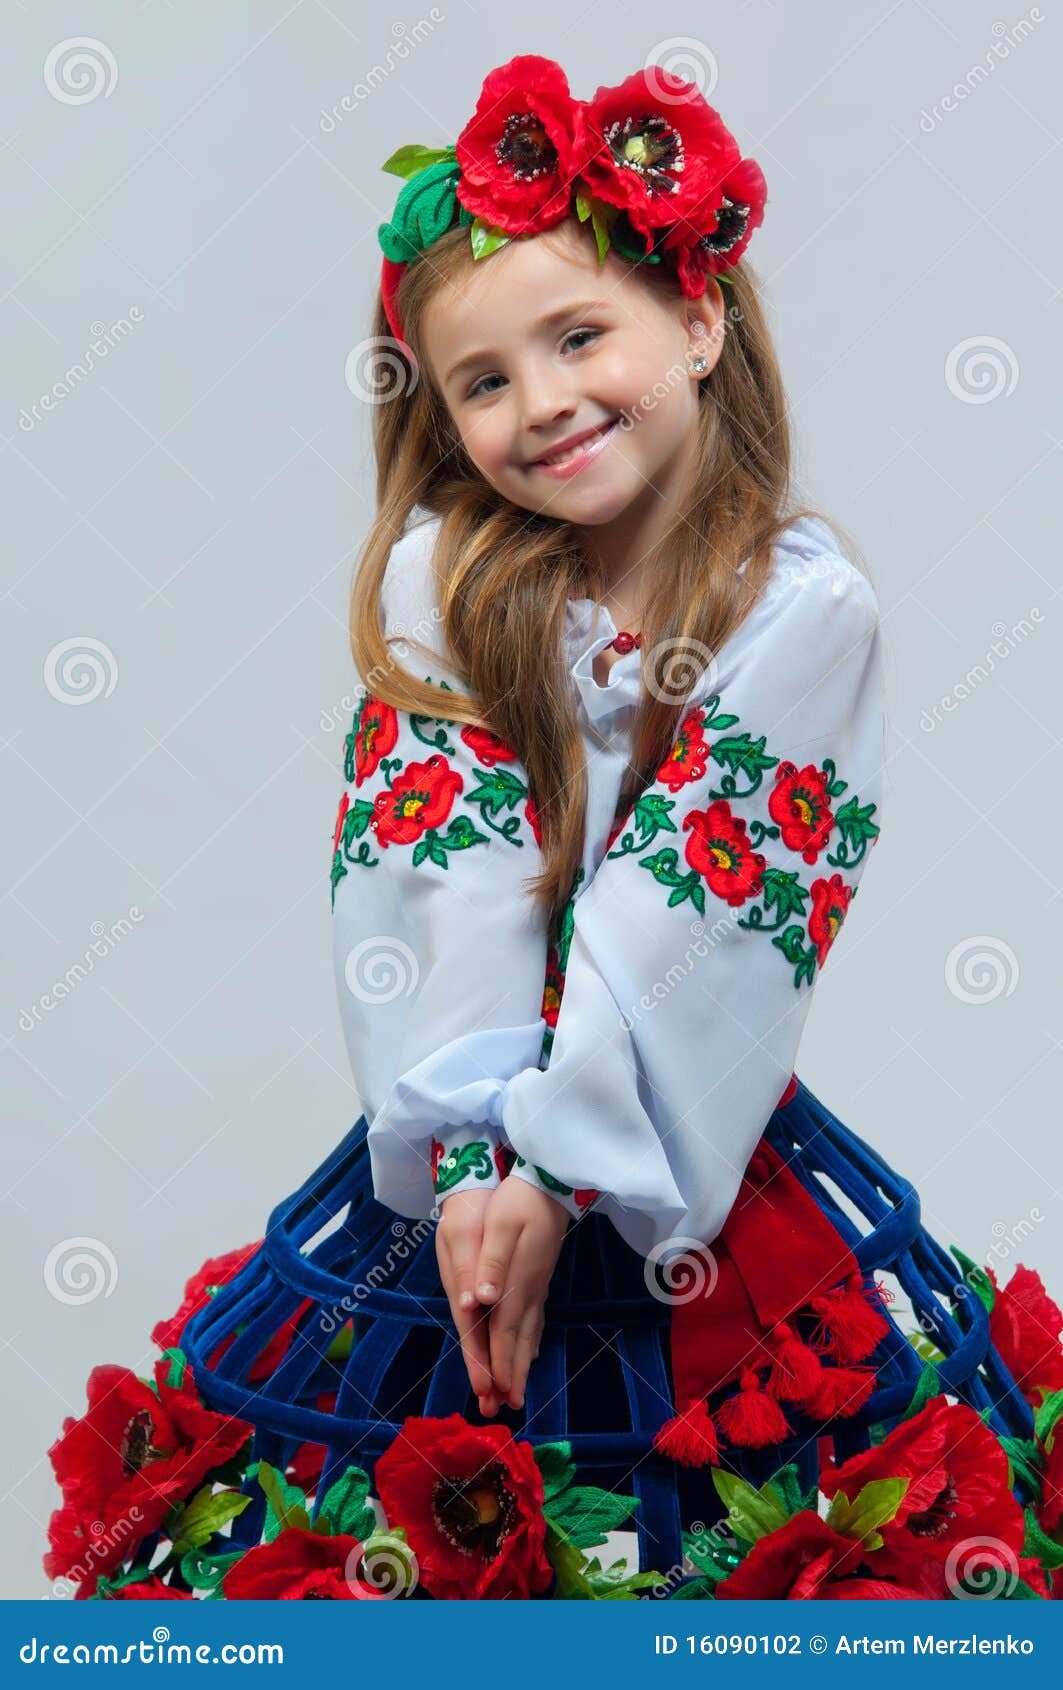 Ukraine national costume stock photos